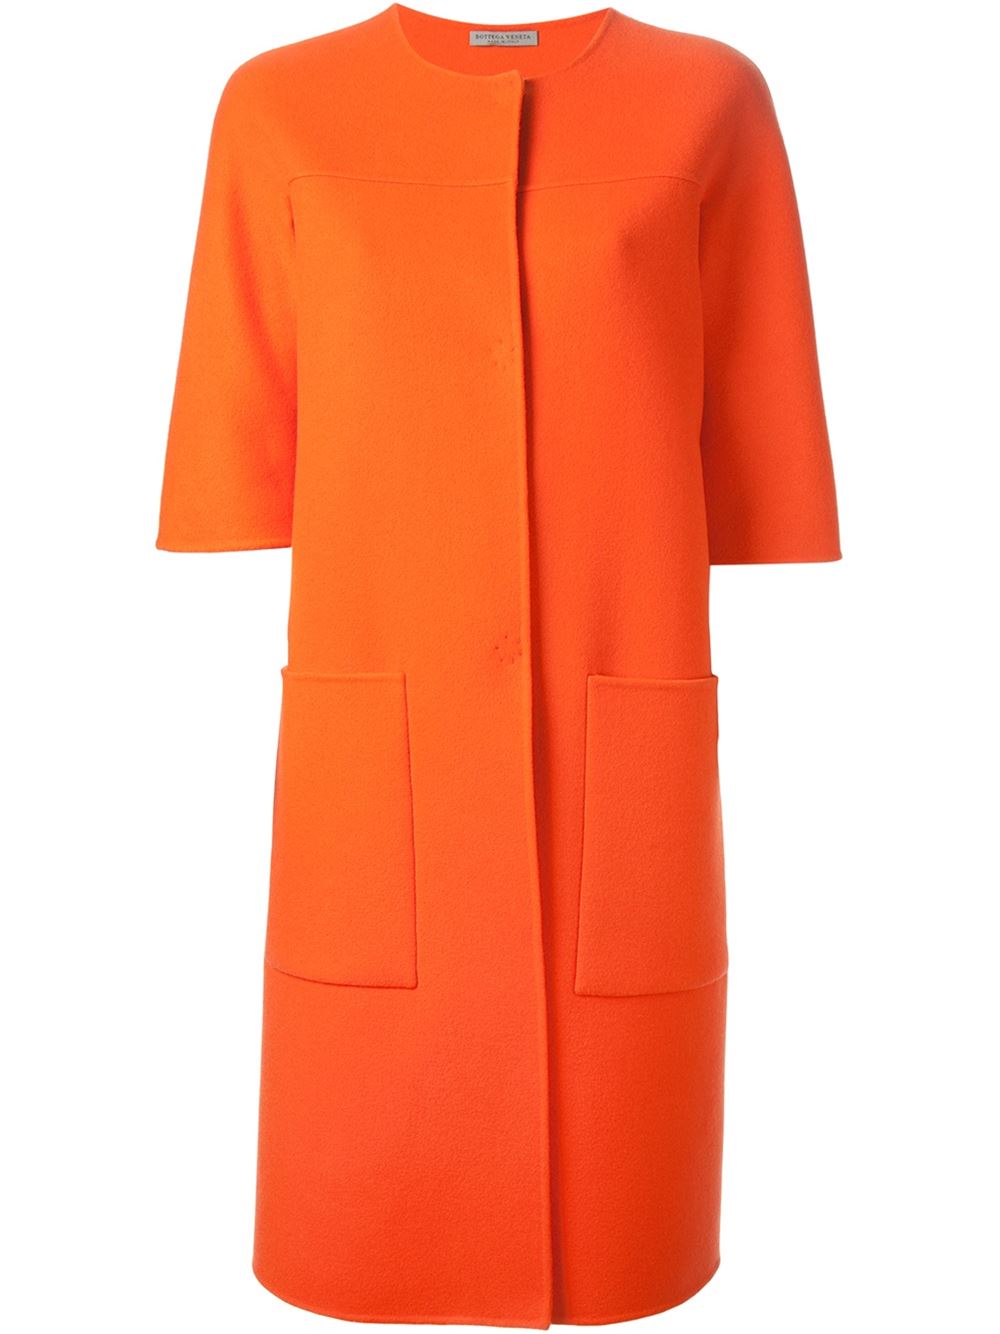 Orange cashmere single breasted coat from Bottega Veneta